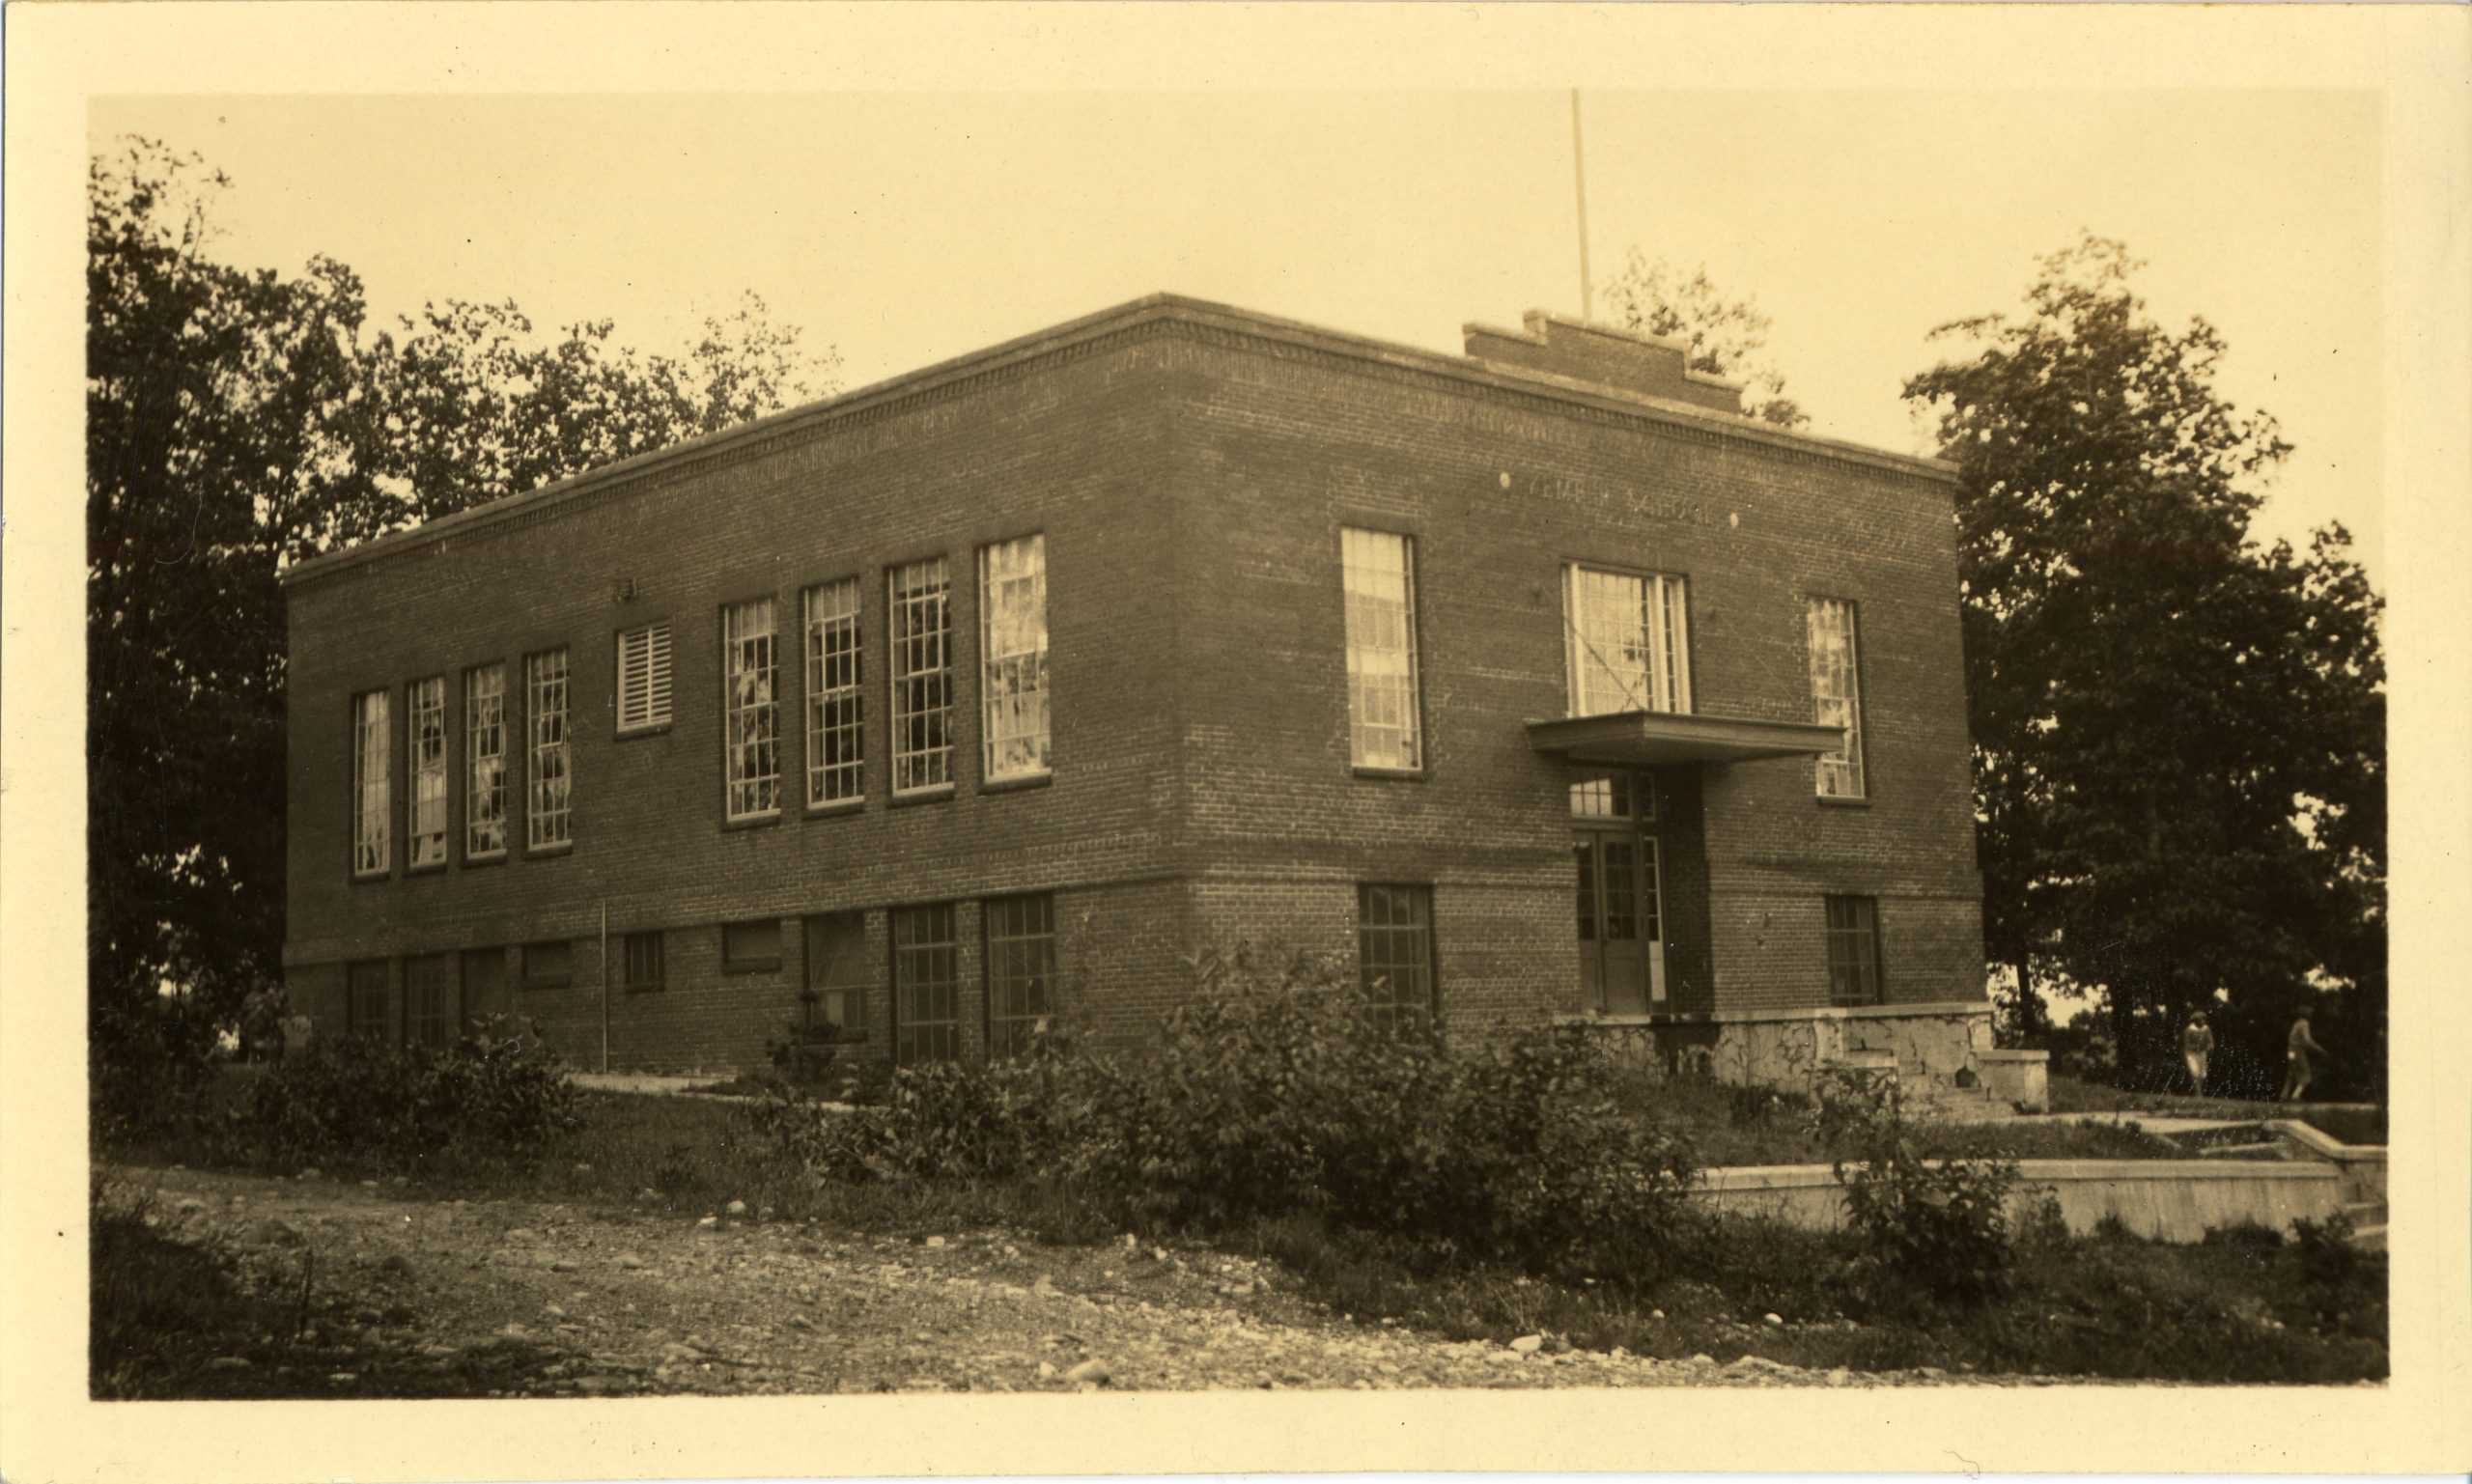 The Kemper school, 1932. Source: Center for Local History, Arlington Public Library.